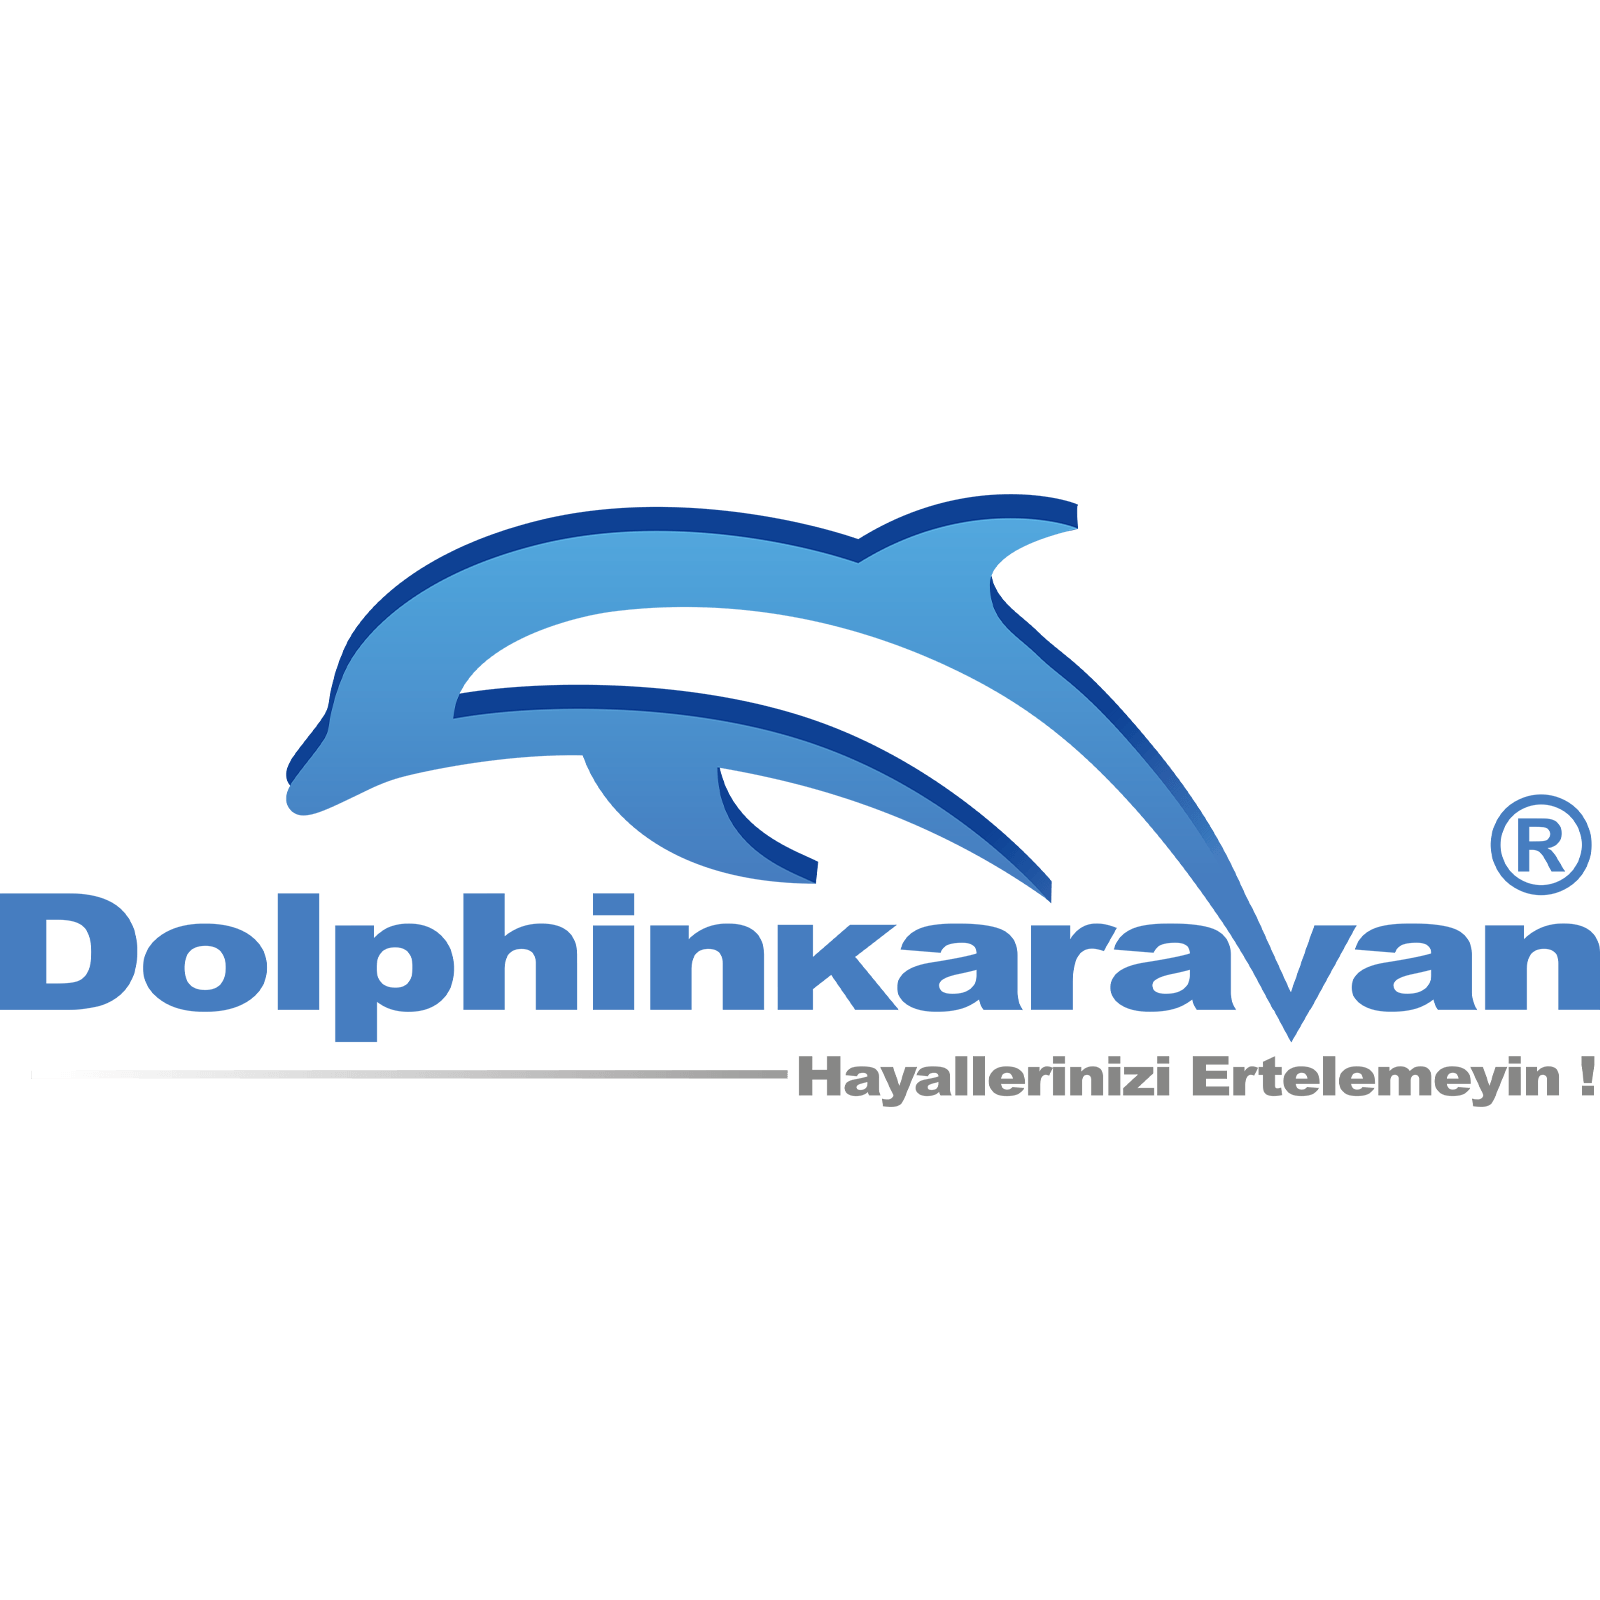 Dolphin Karavan